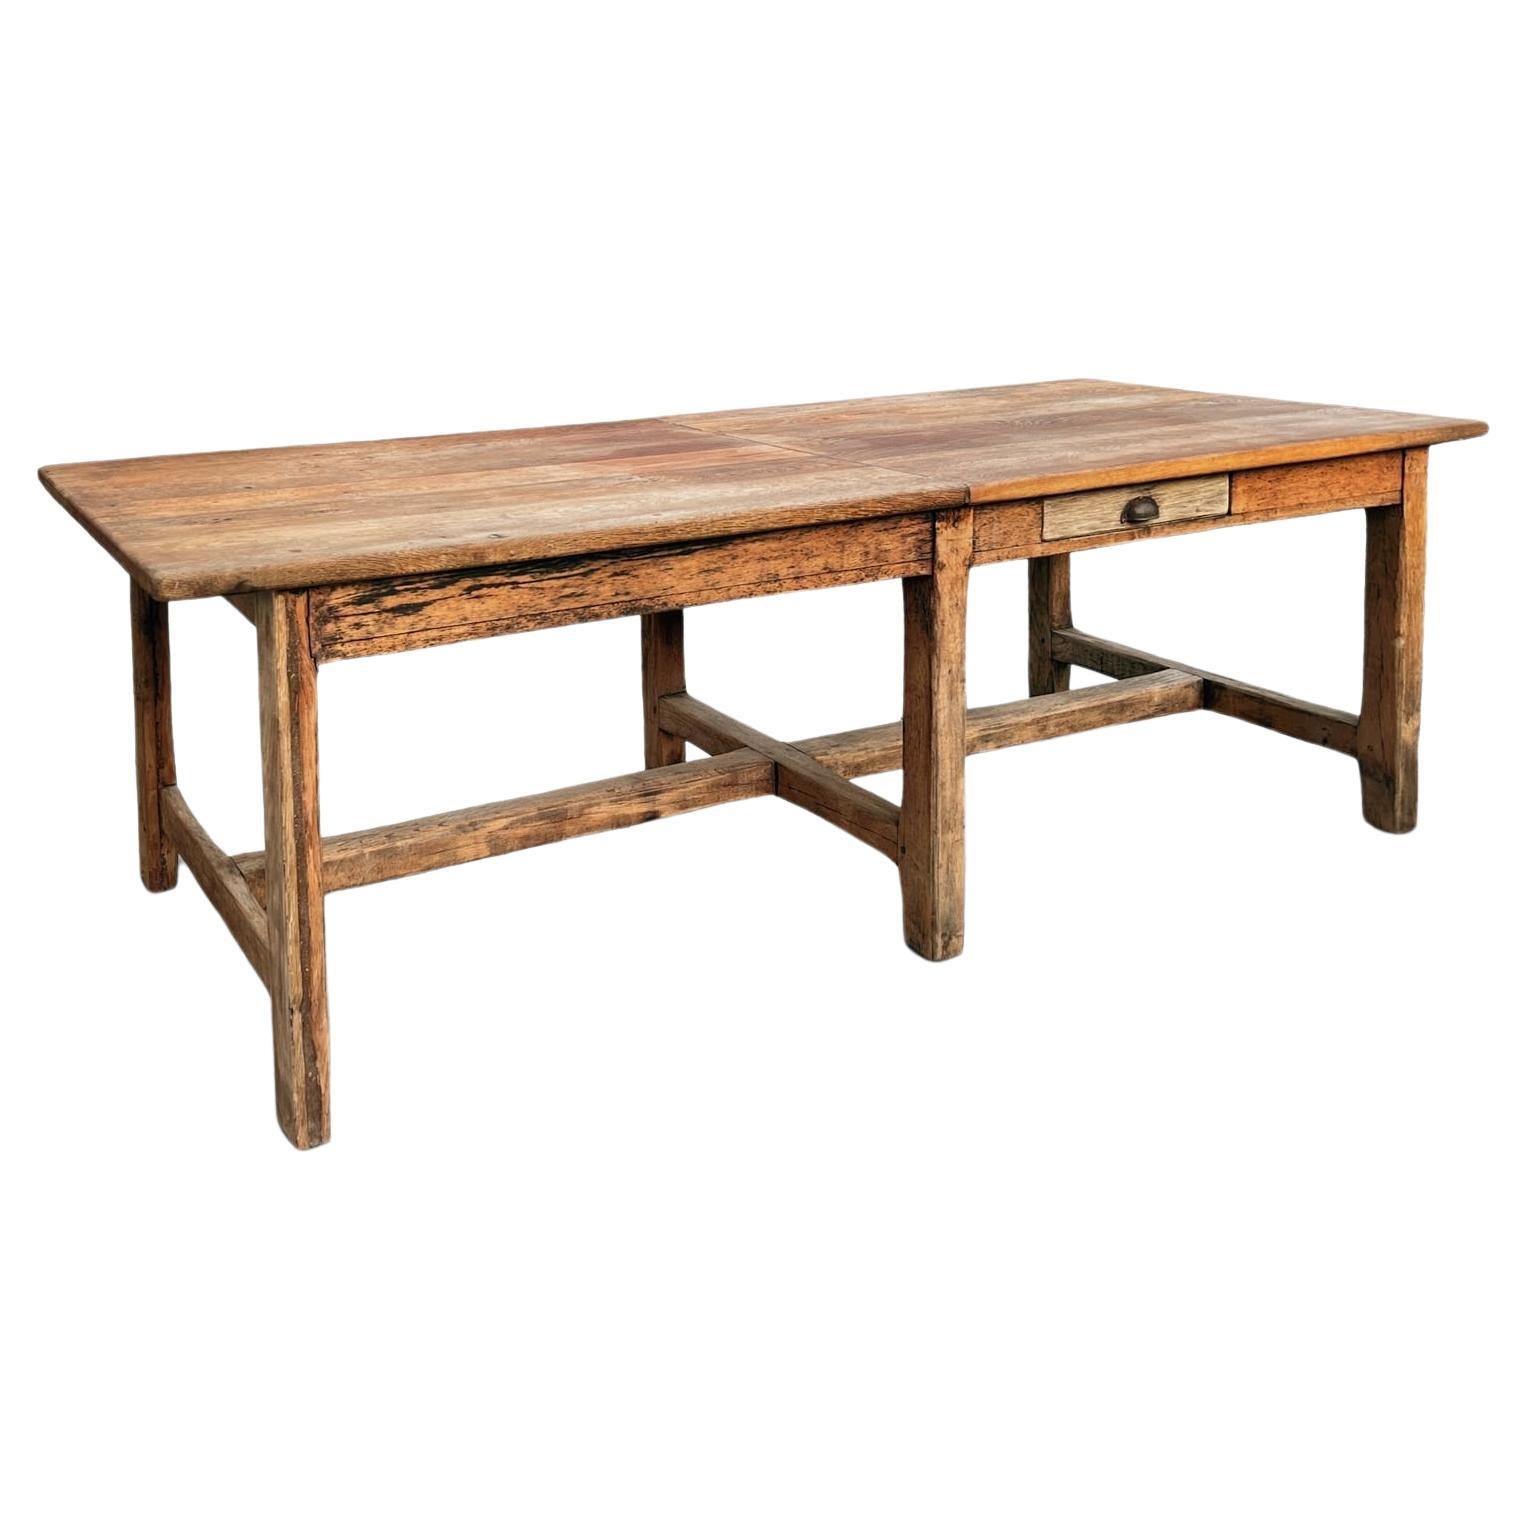 19th-century oakwood farm table